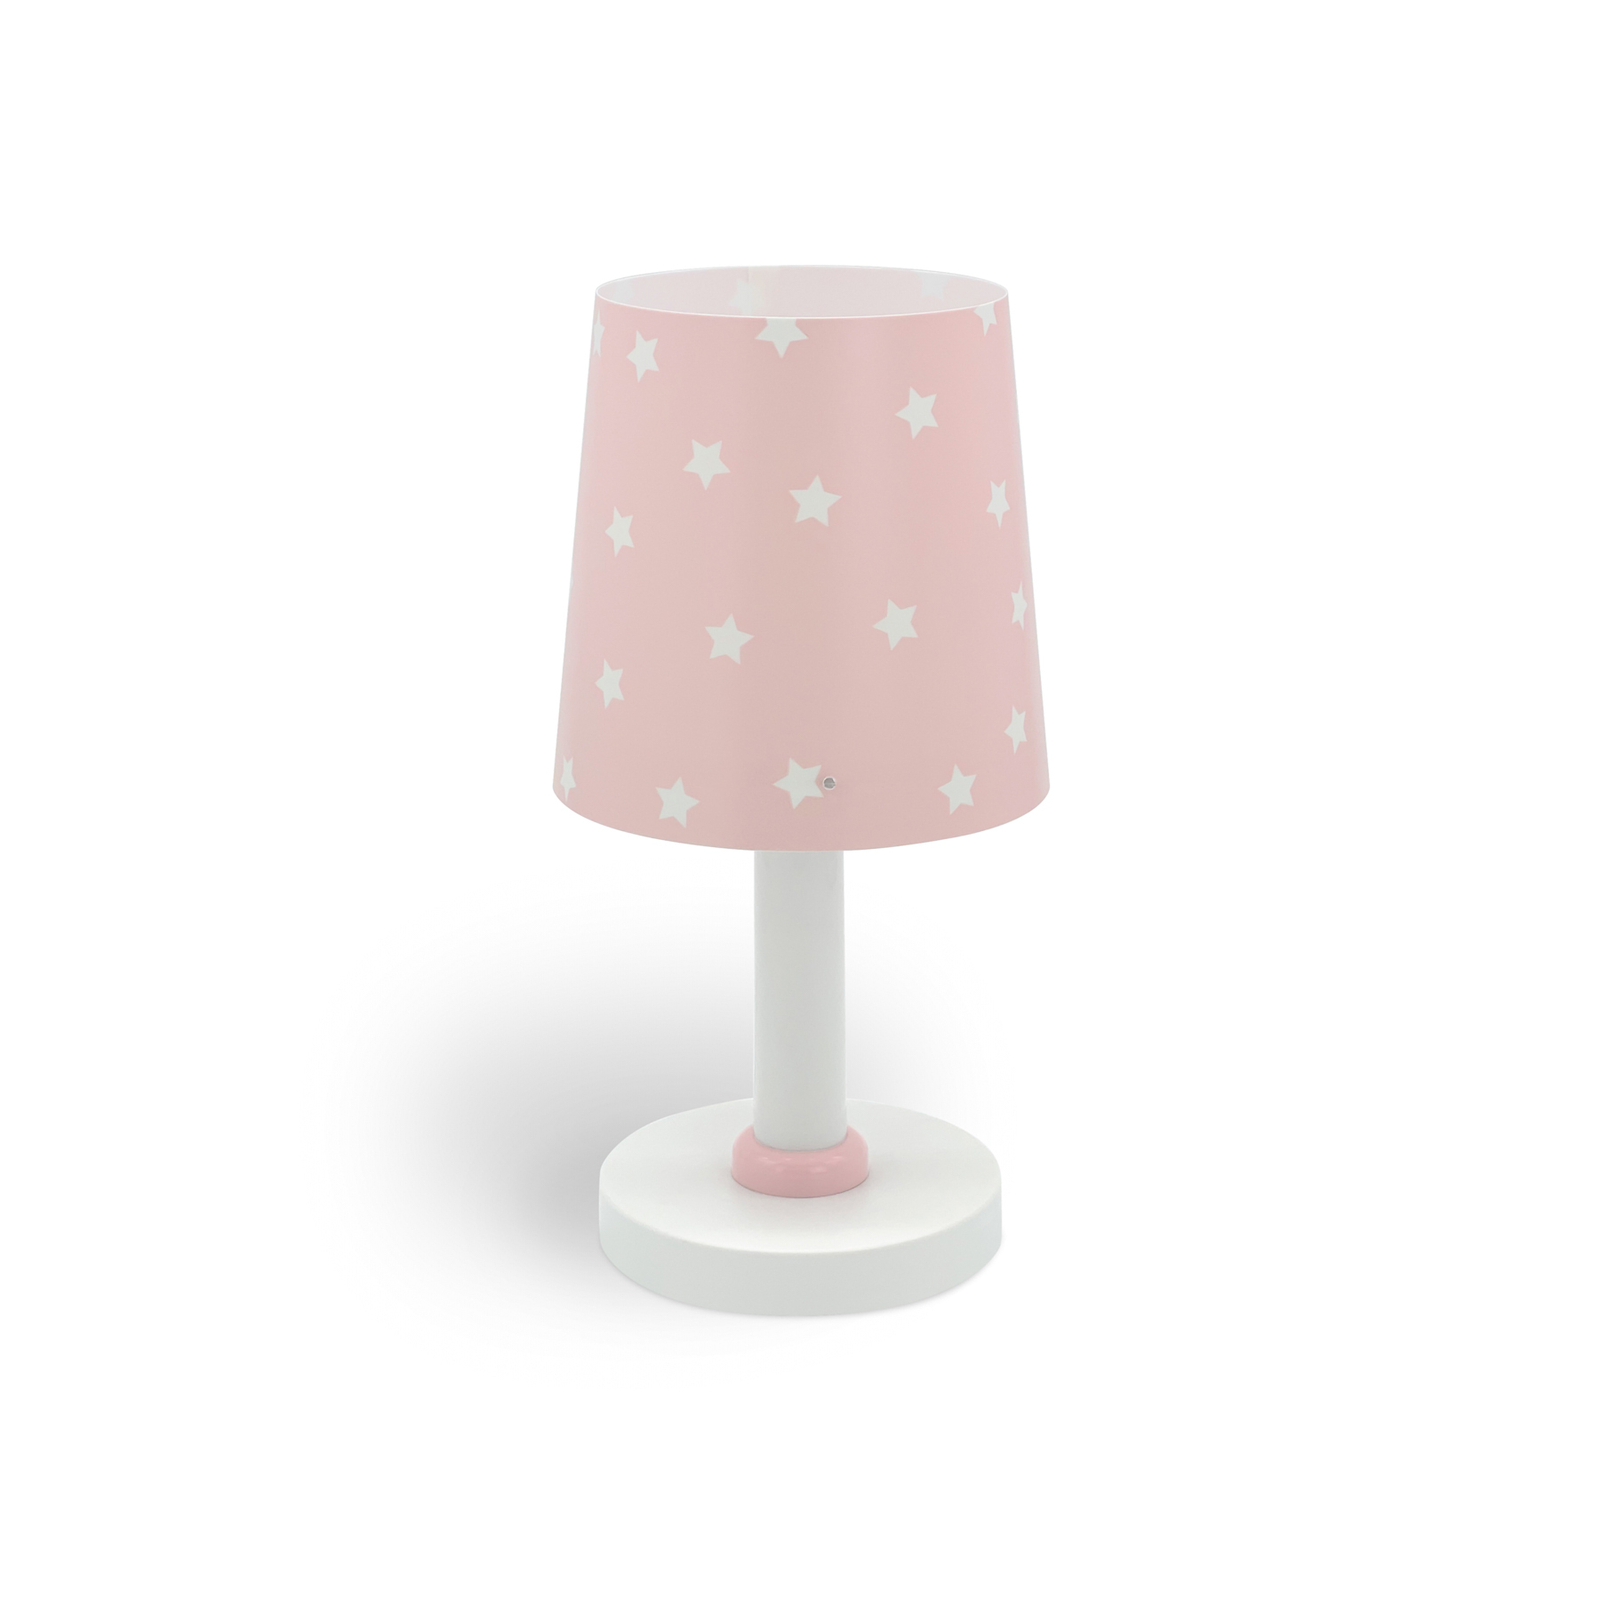 Dalber Star Light bērnu galda lampa rozā krāsā